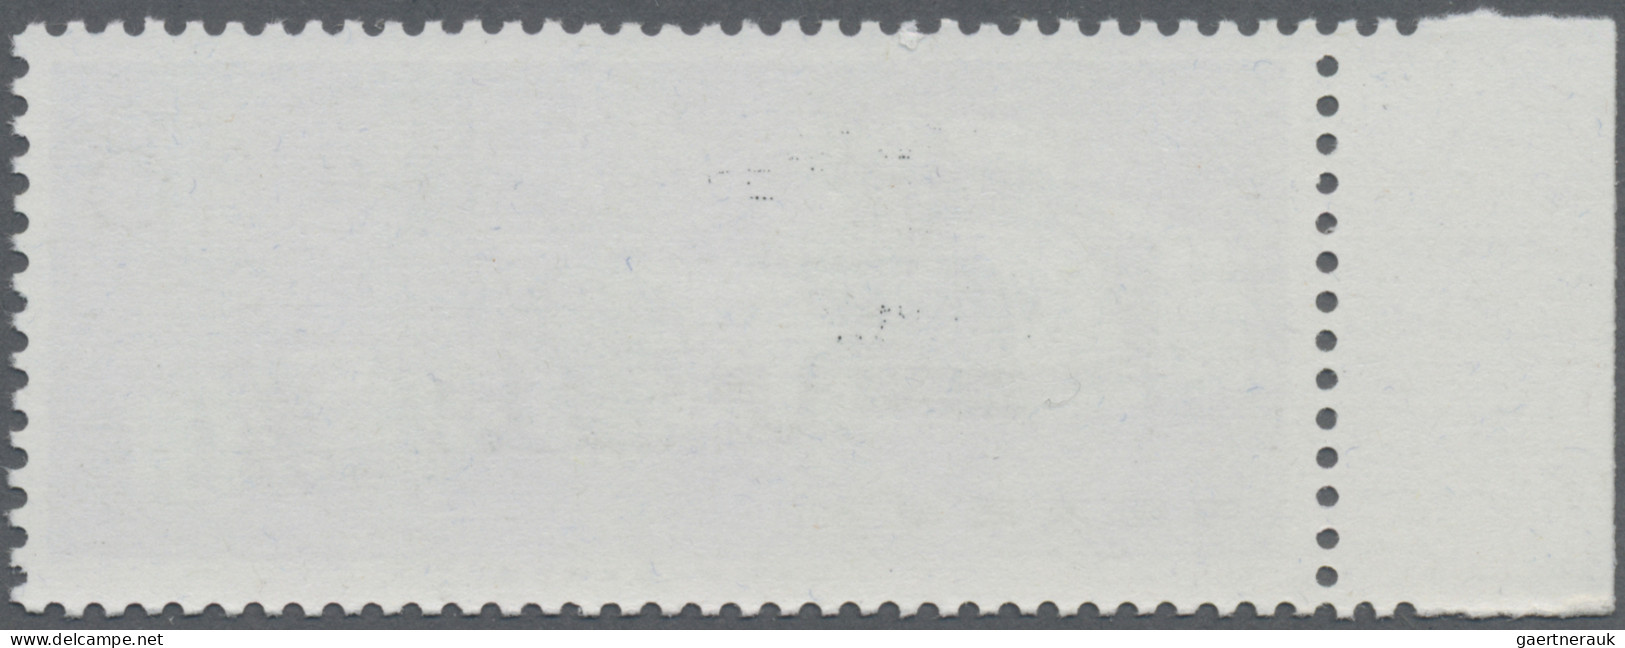 China (PRC): 1974, Machine Construction Set (N78-81),MNH, With Margin, Stamp B1 - Neufs